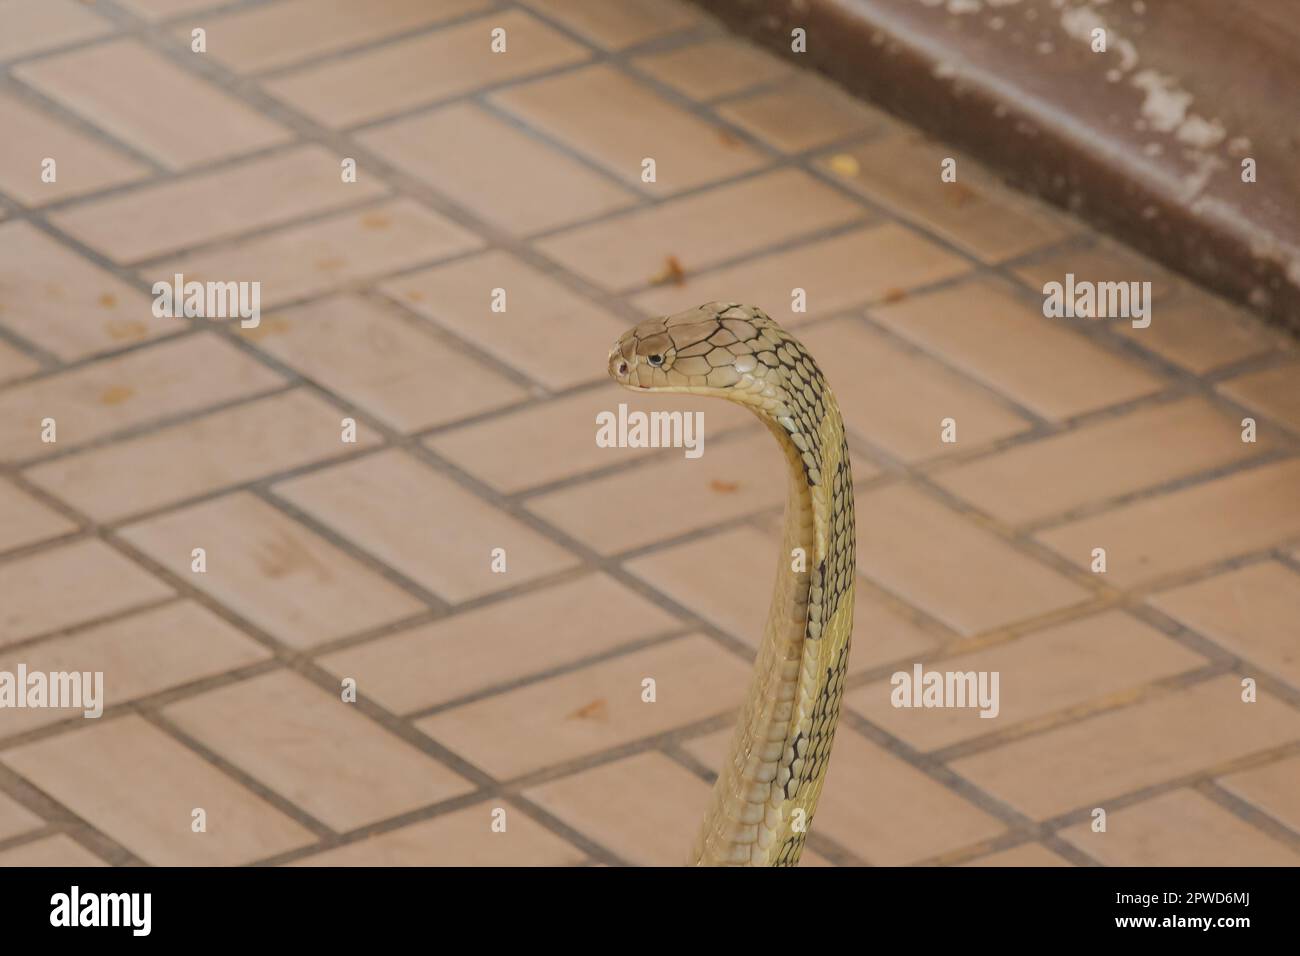 King cobra is raising his neck. King cobra is the longest venomous snake in the world. Stock Photo